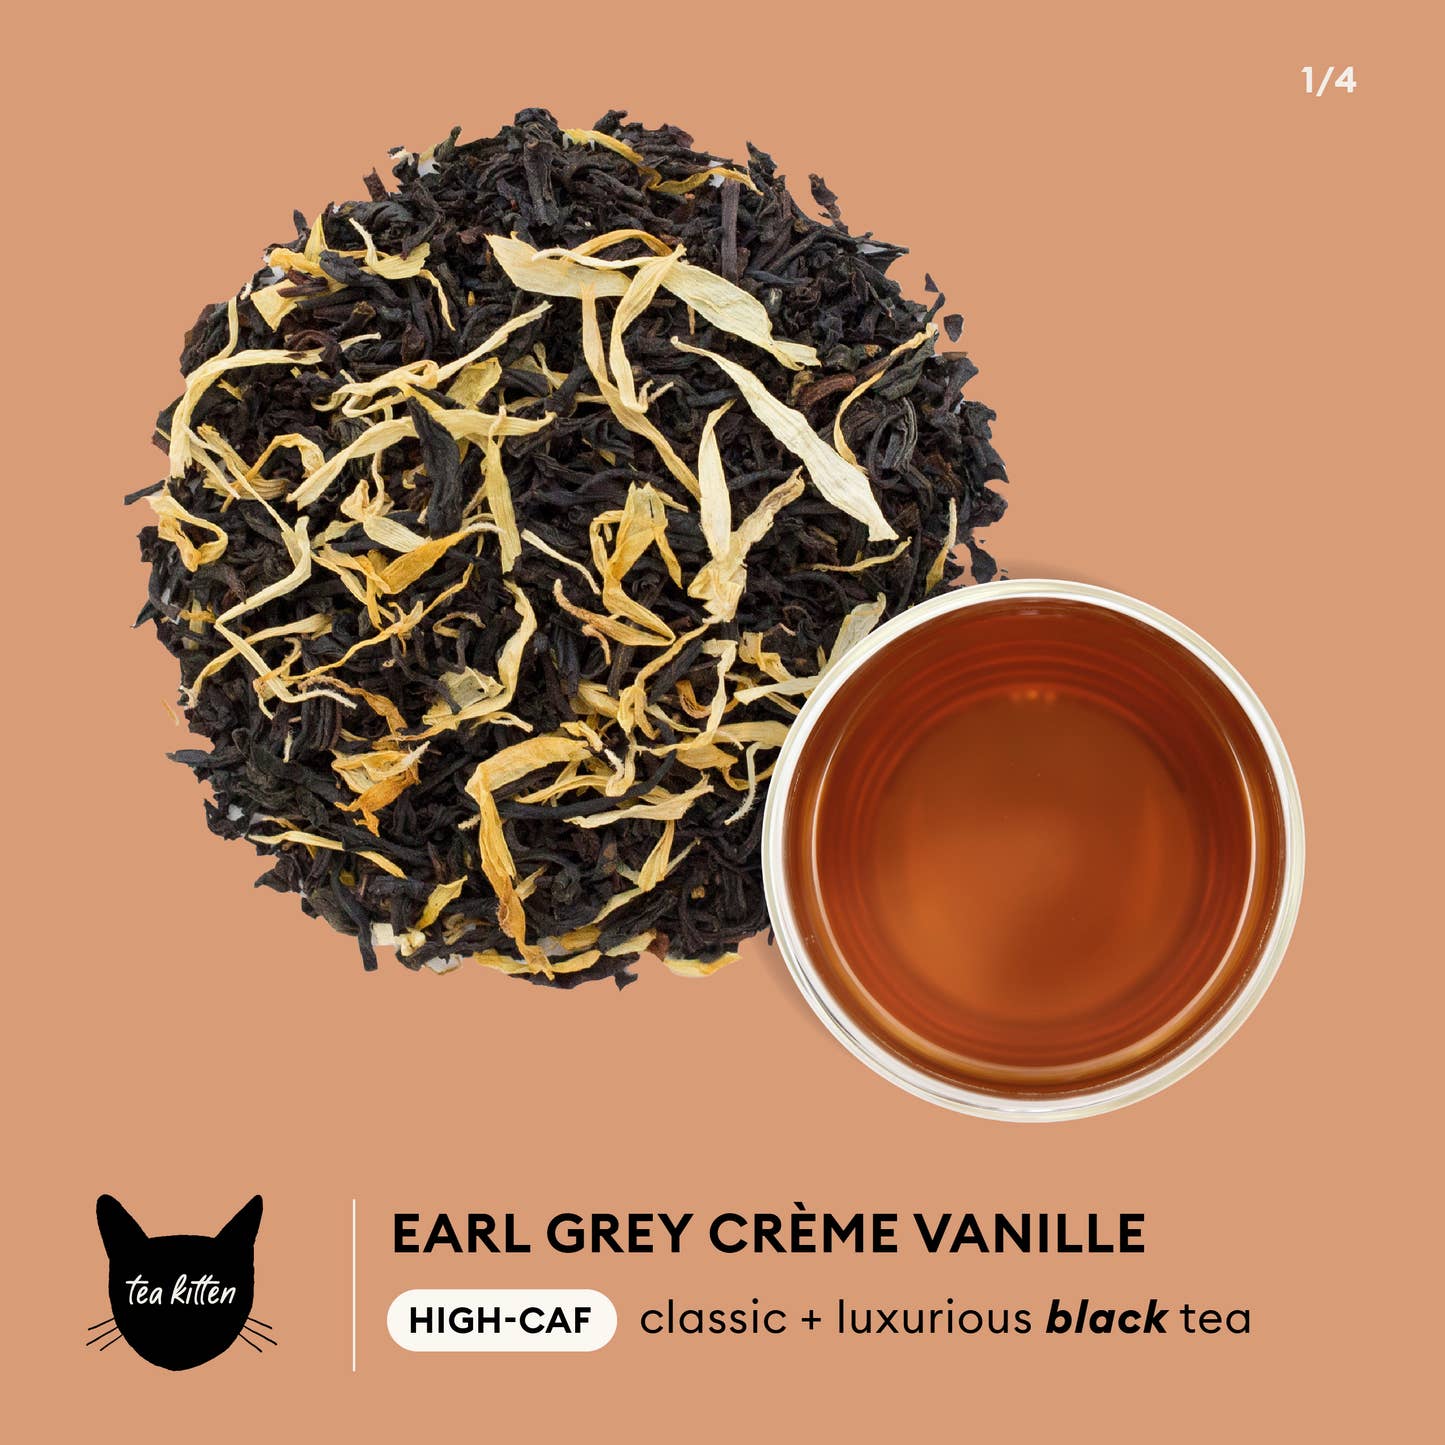 Tea Kitten - Earl Grey Creme Vanille Infographic - HIGH-CAF classic + luxurious black tea